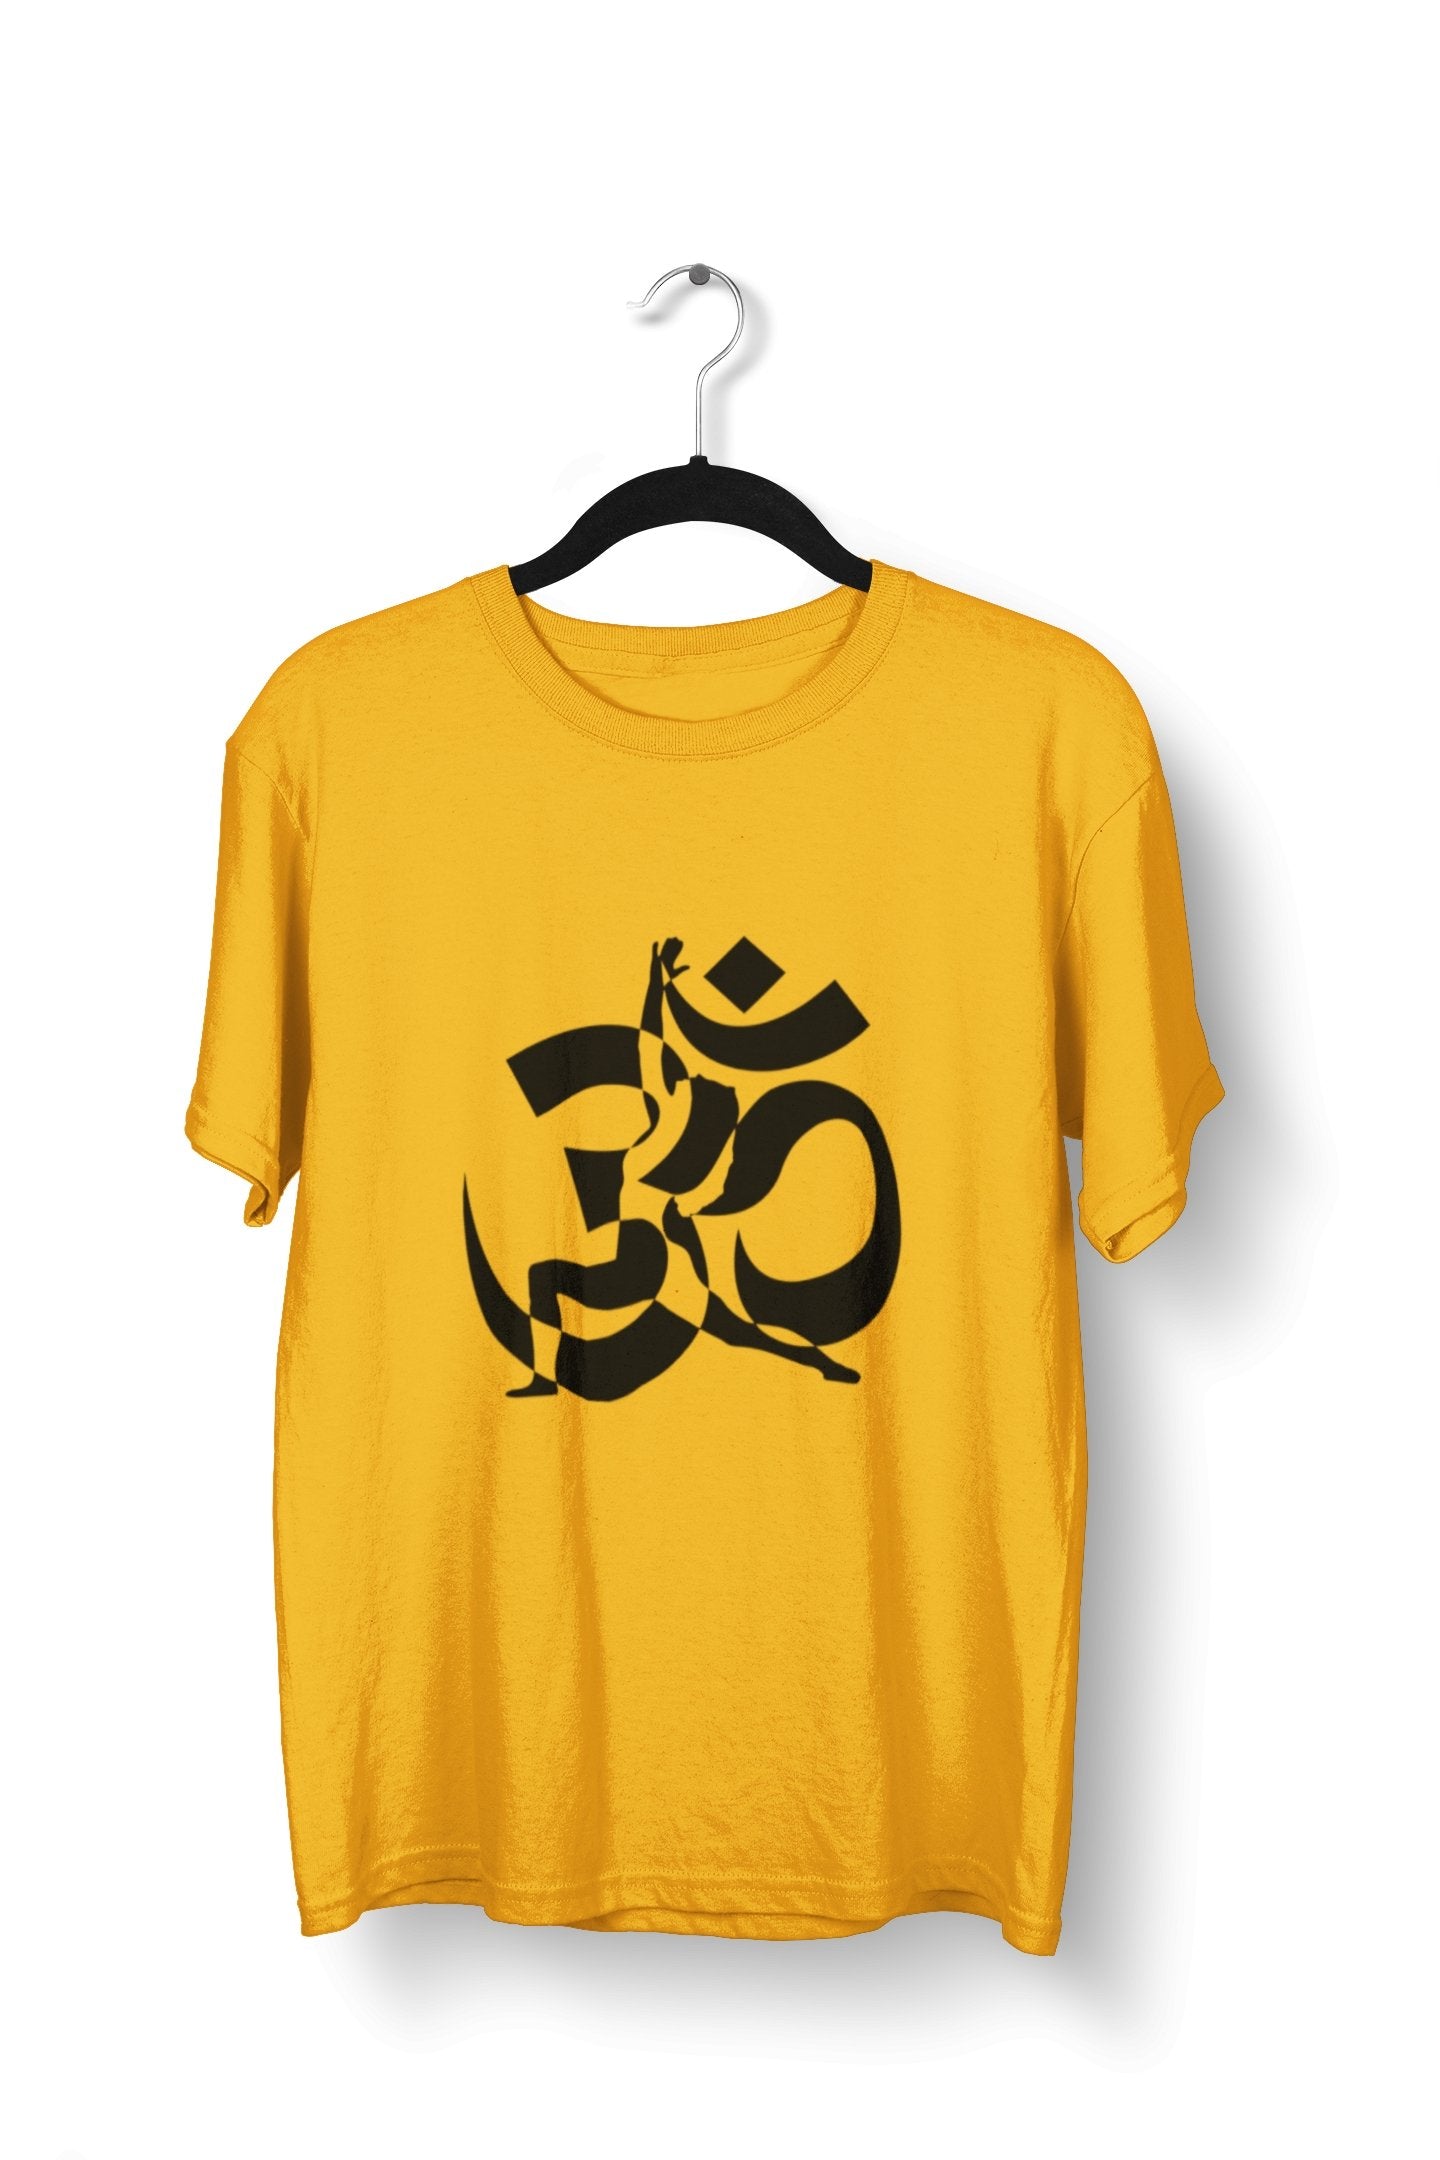 thelegalgang,Om Yoga Graphic Printed T-Shirt for Men,.